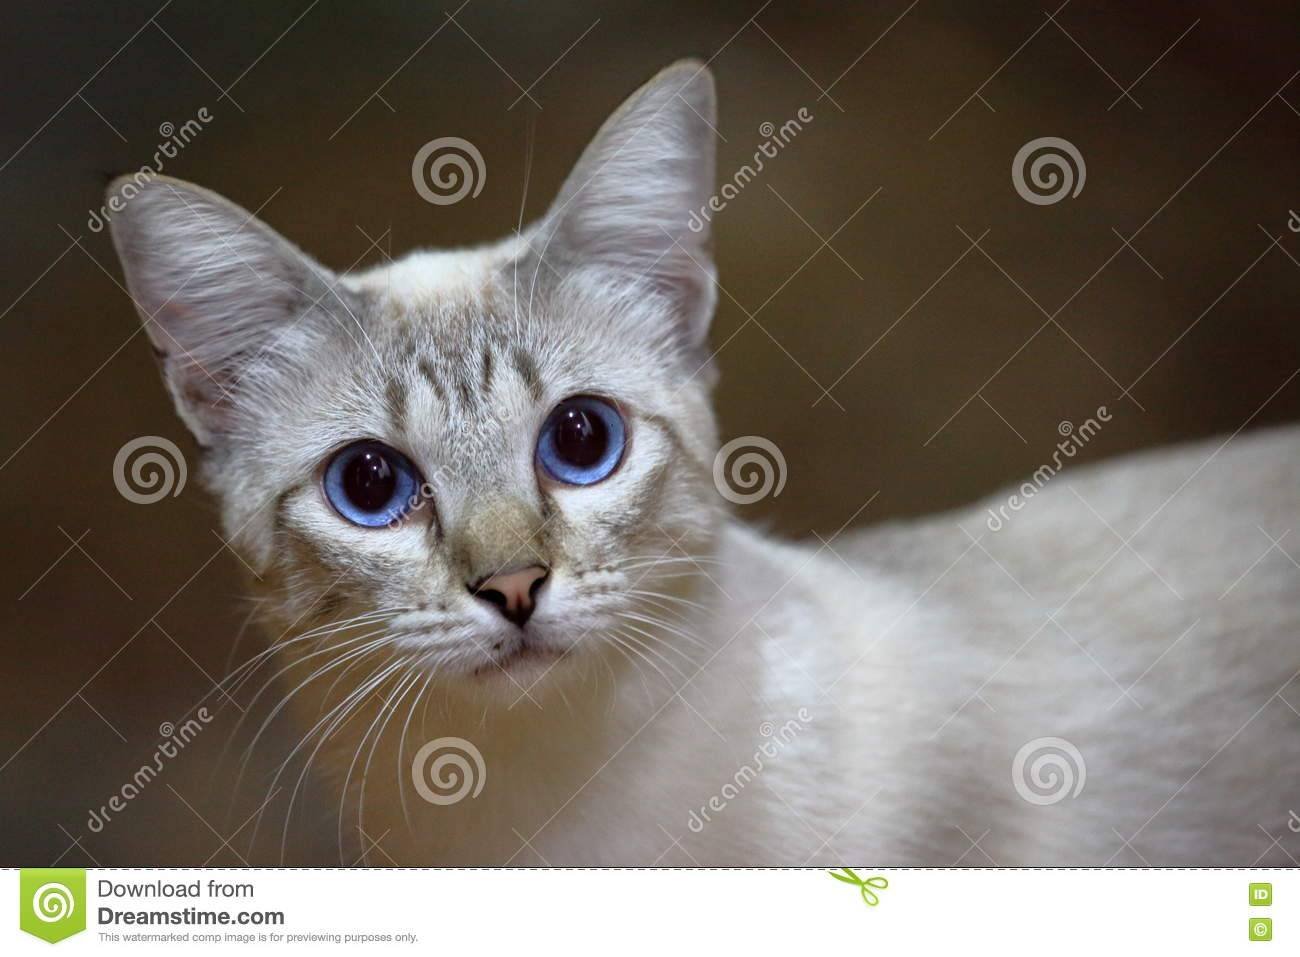 Охос азулес - описание породы и характер кошки